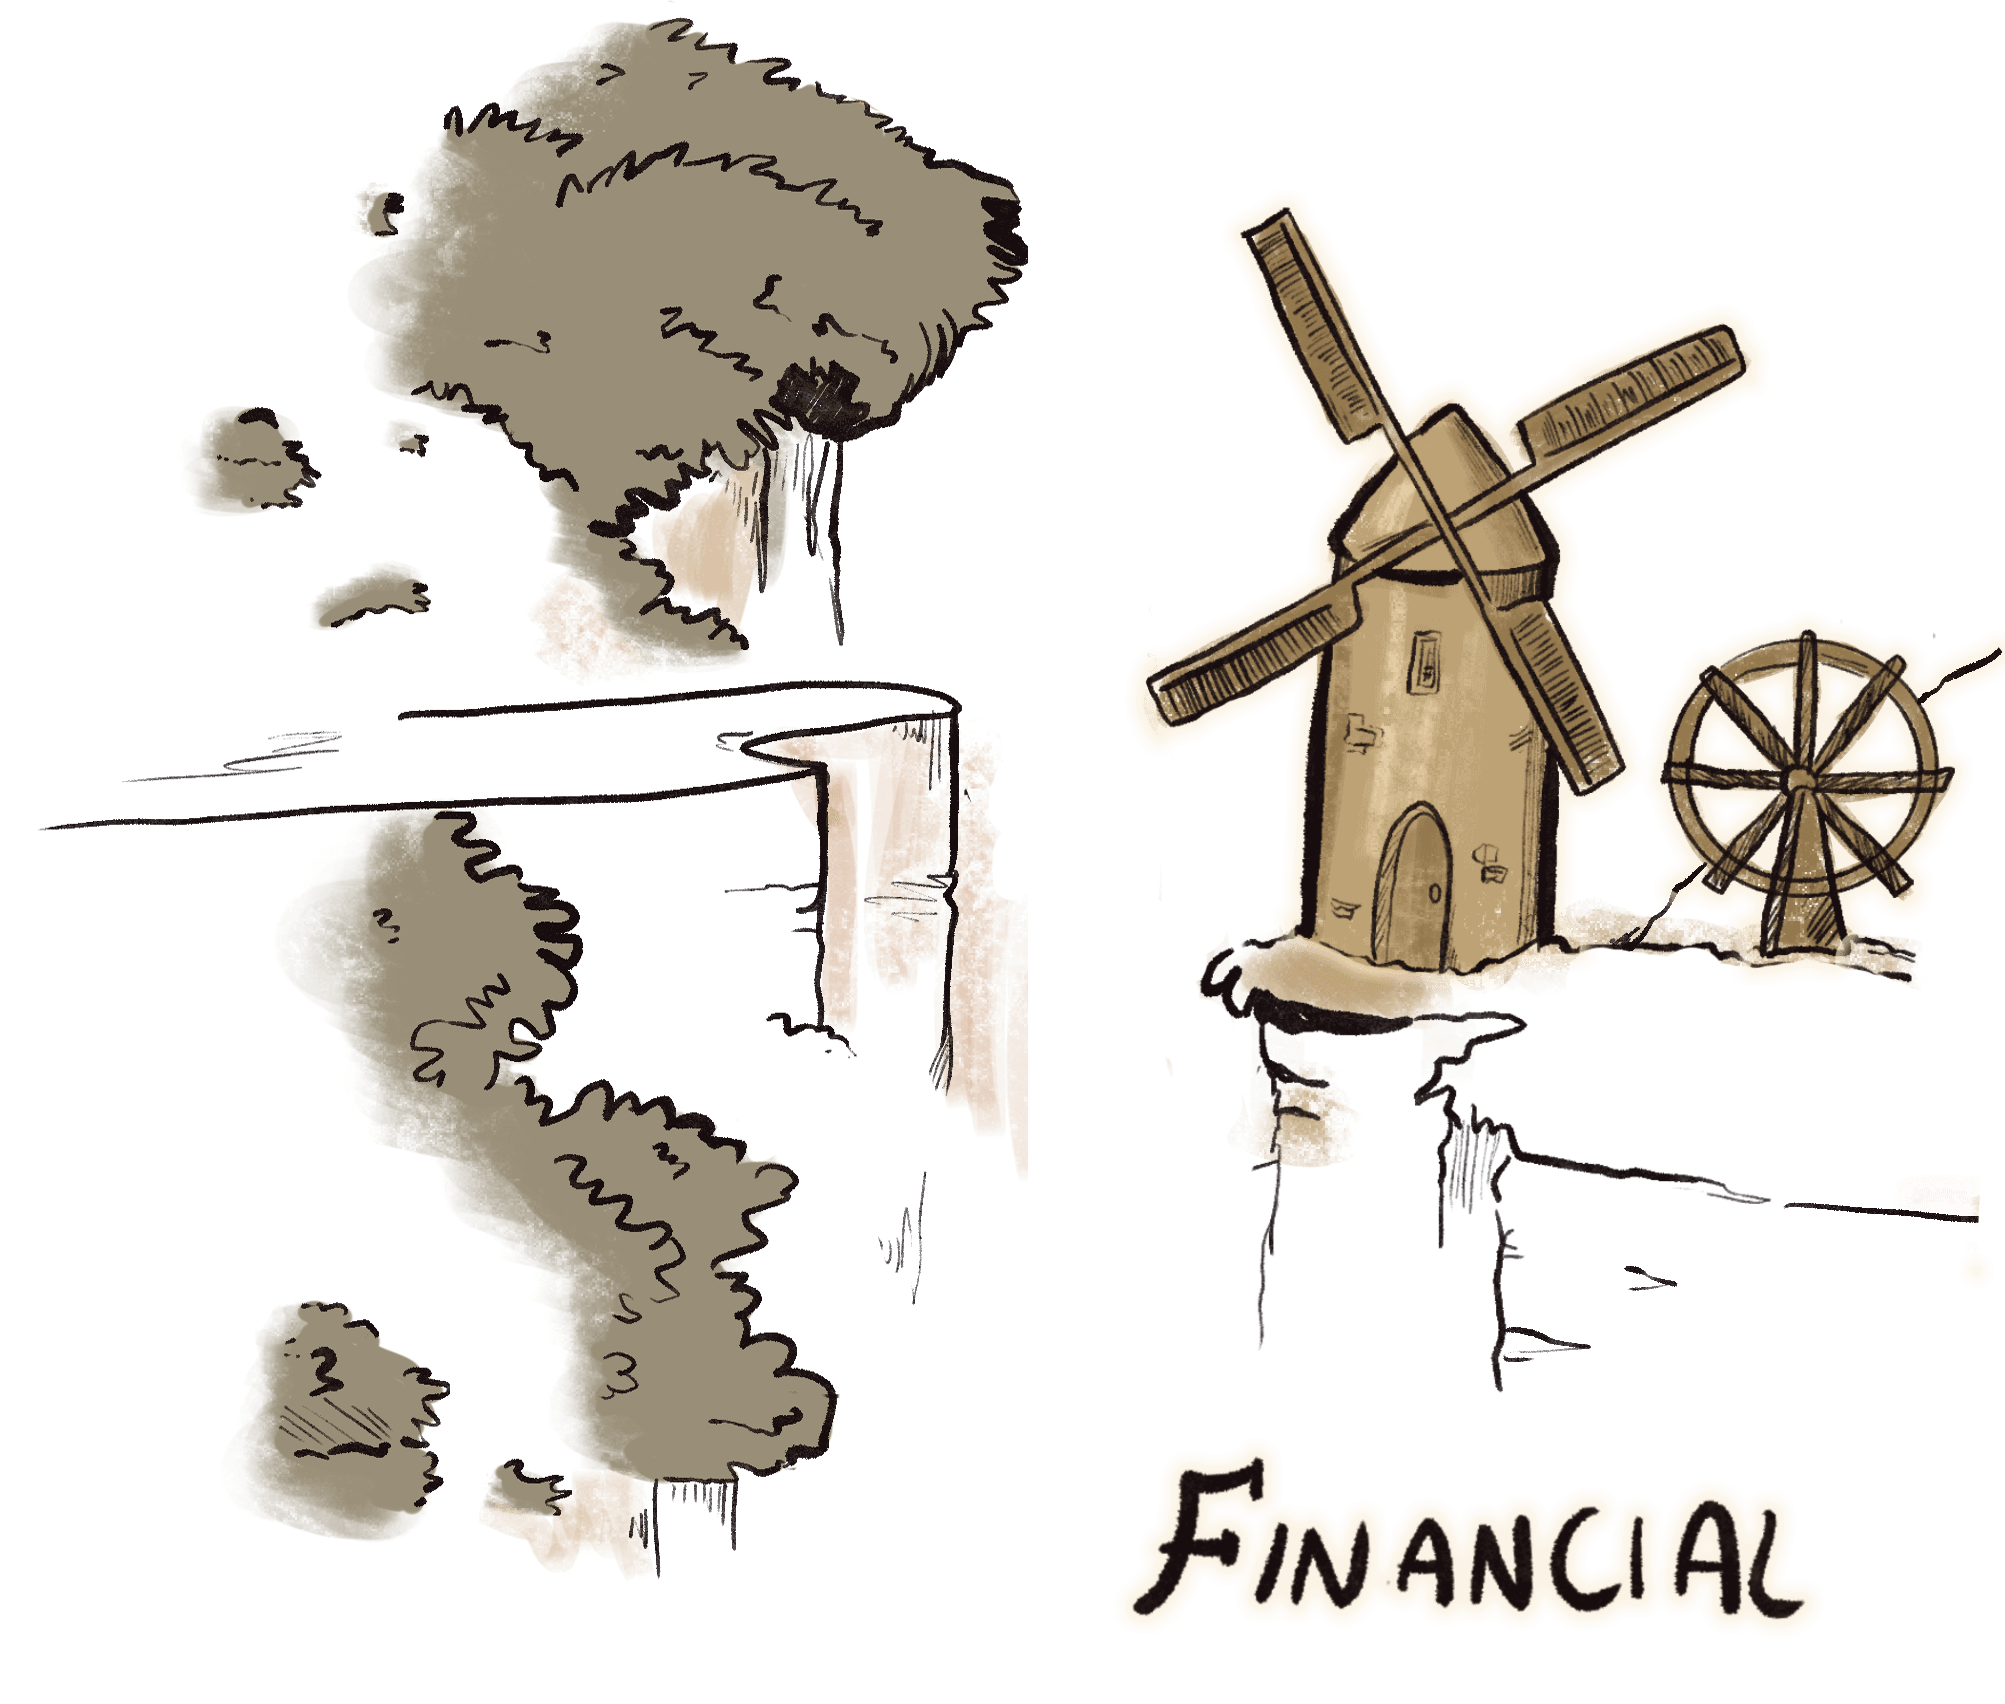 Financial